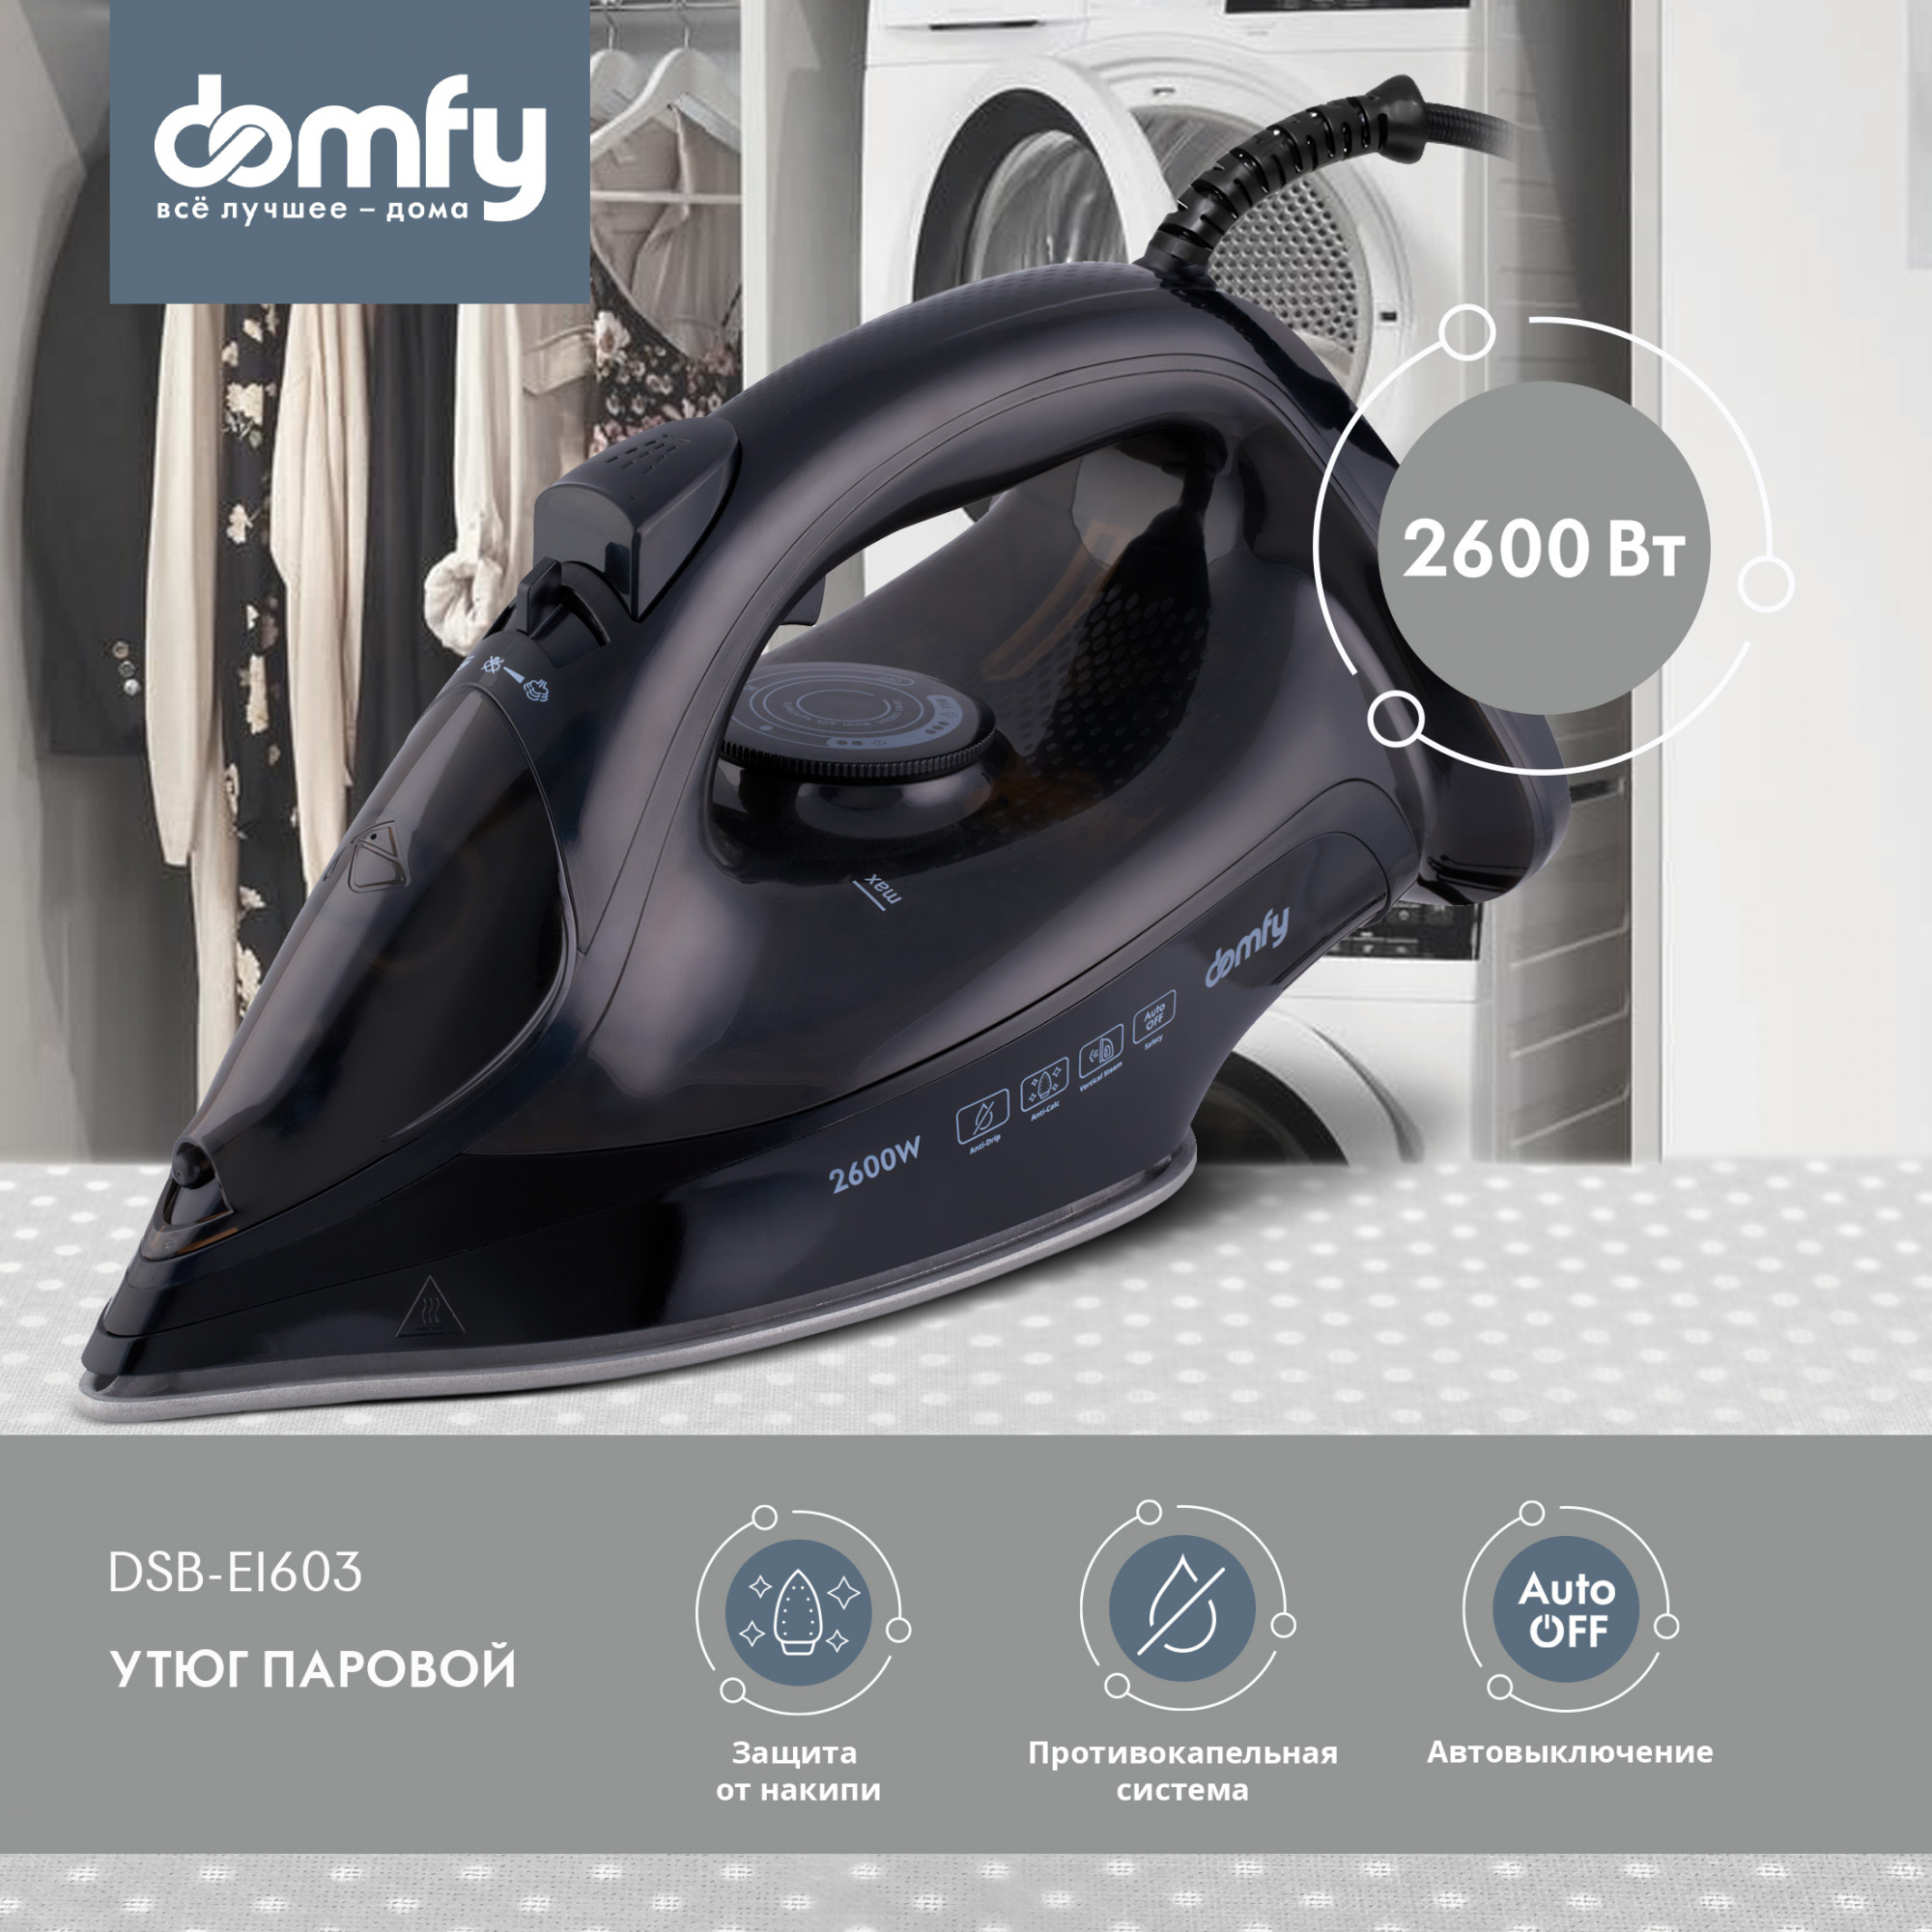 Утюг Domfy DSB-EI603 2600Вт черный